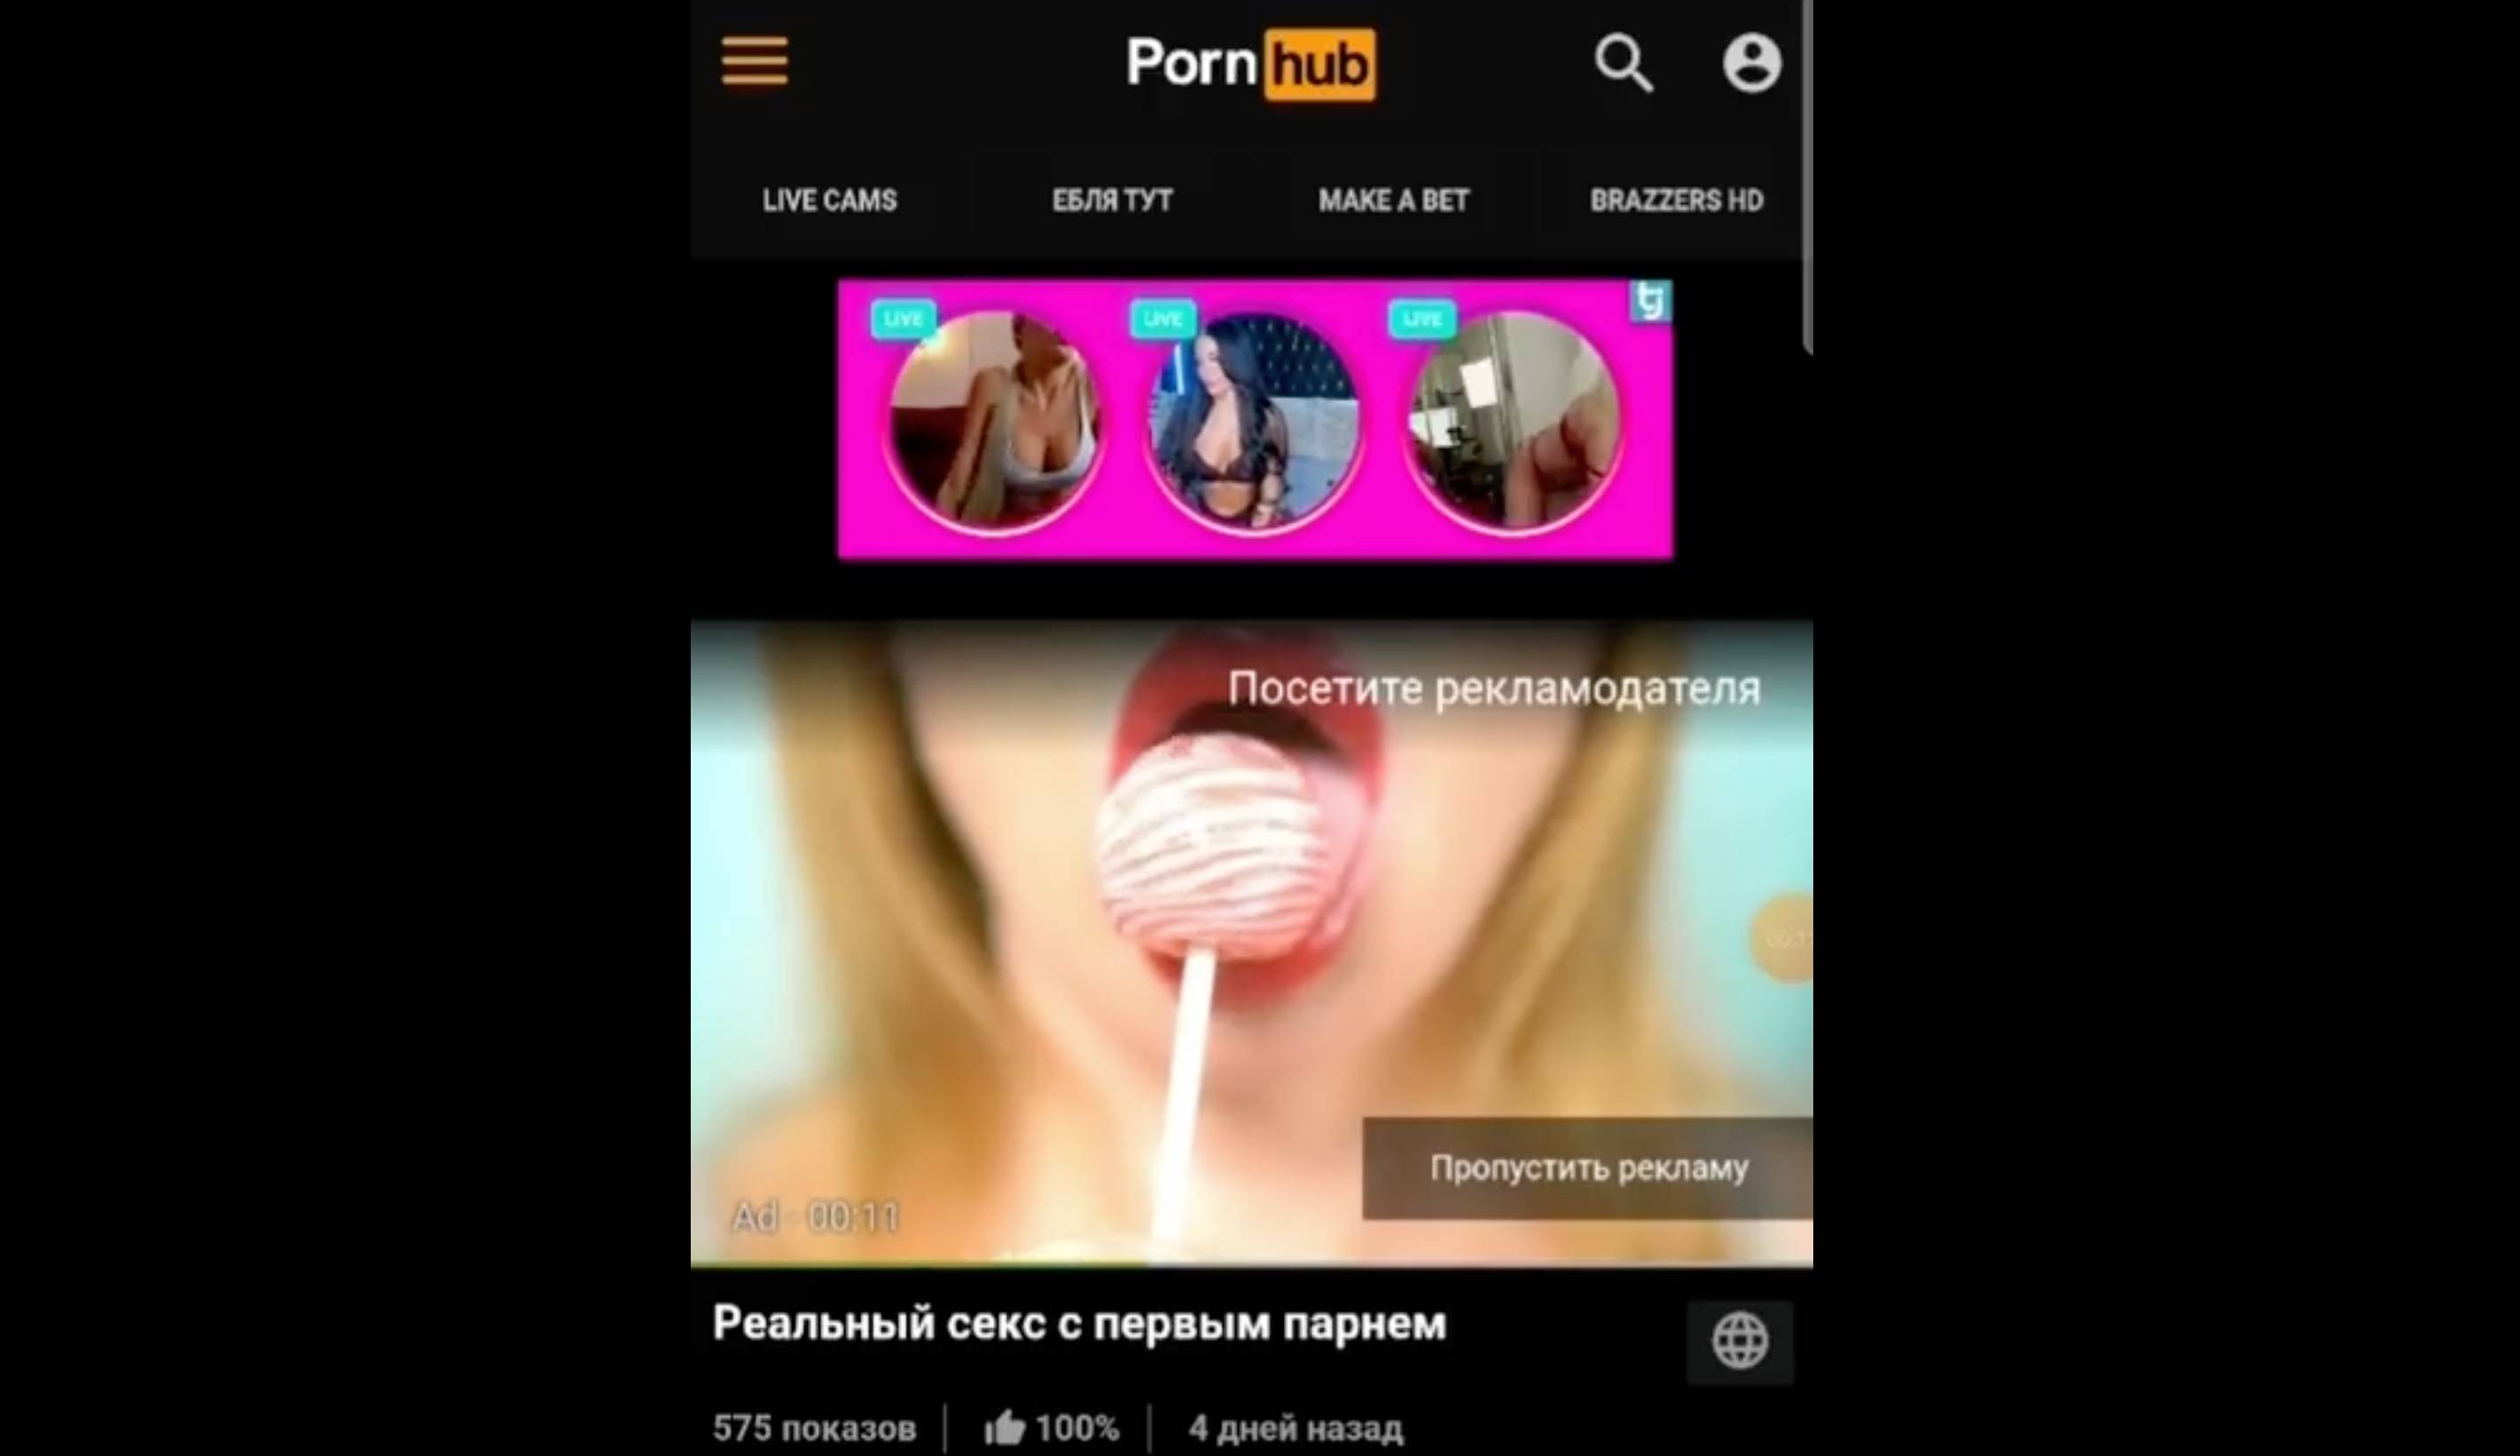 Purbhub - Notorious Russian Mercenaries Wagner Are Advertising on Pornhub